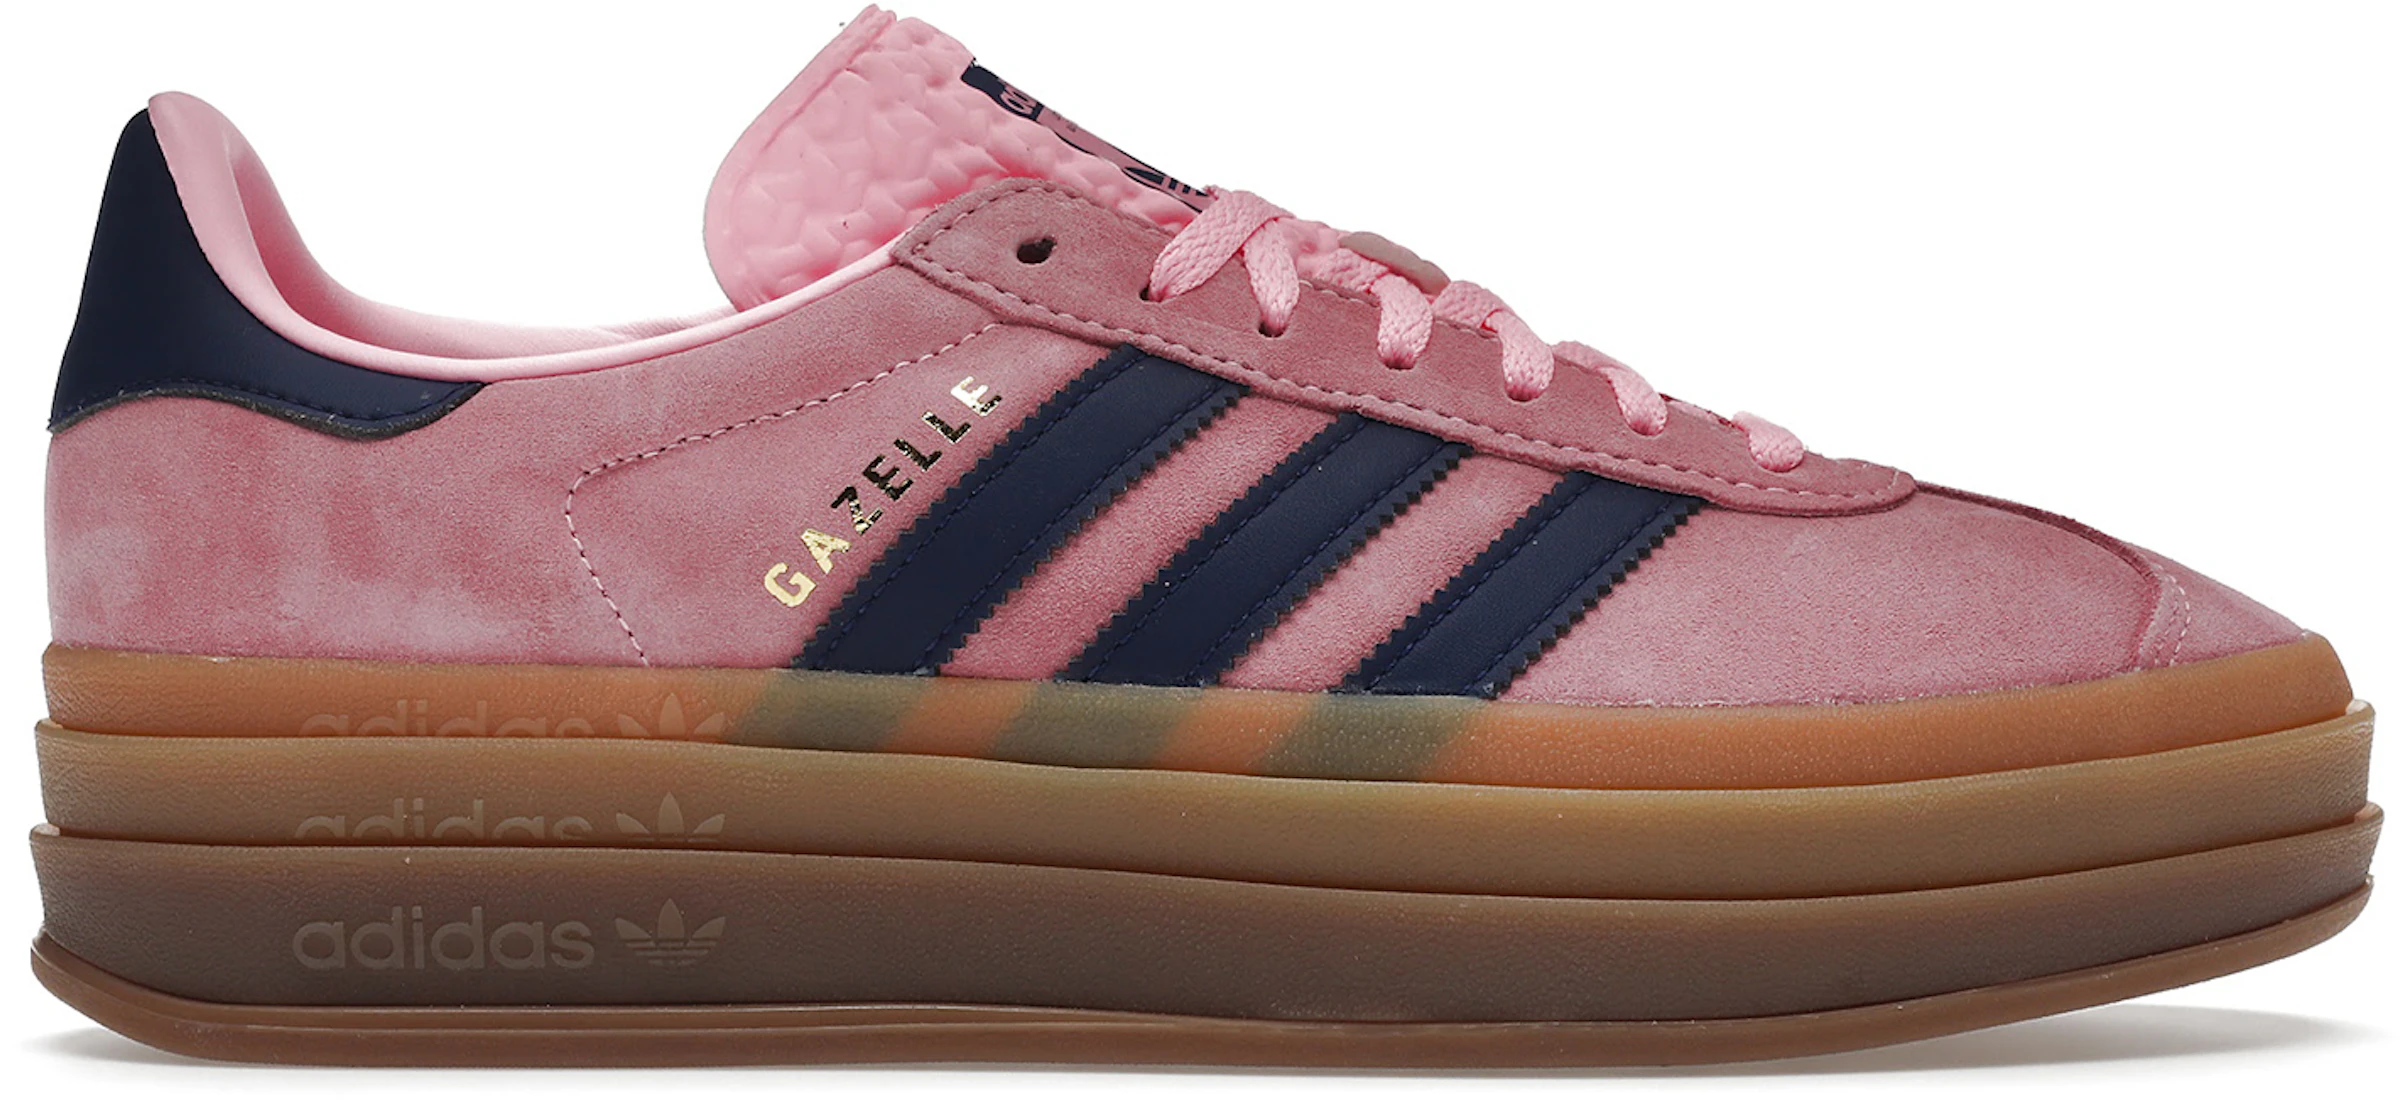 adidas Gazelle Bold Pink (Women's) - H06122 US